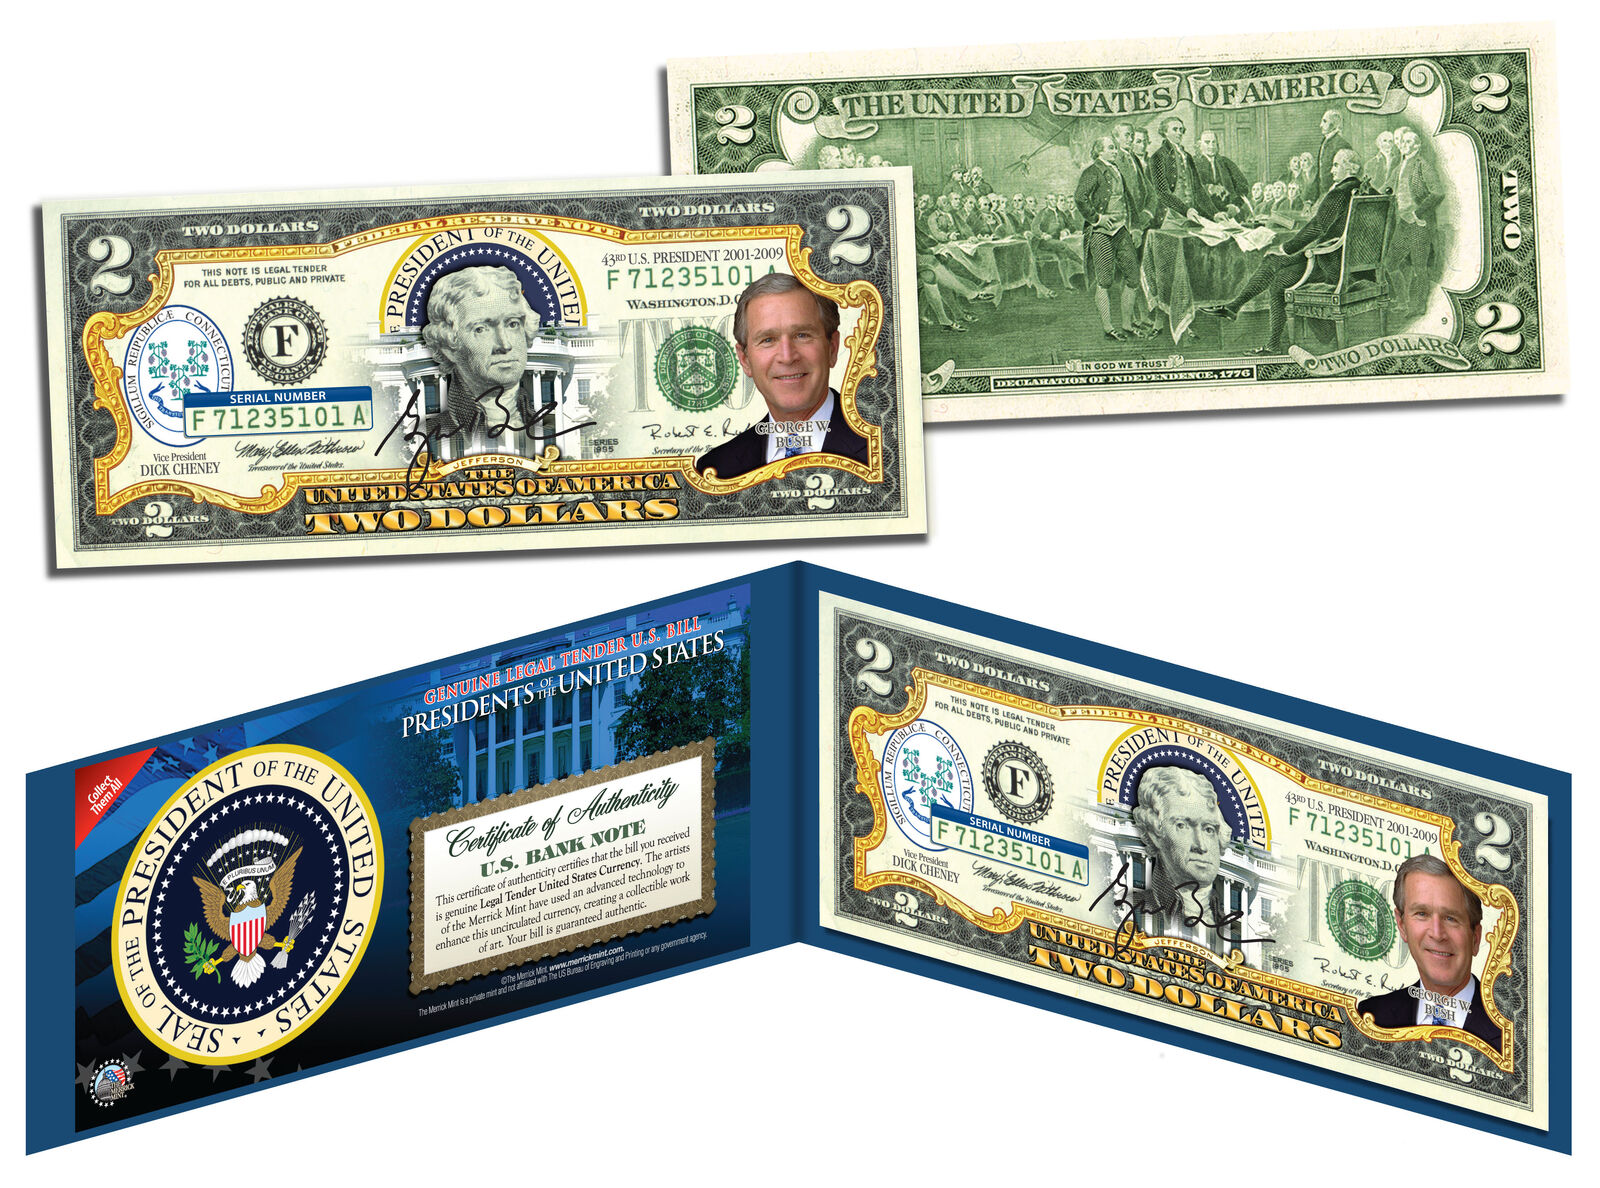 GEORGE W BUSH * 43rd U.S. President * Colorized $2 Bill US Genuine Legal Tender